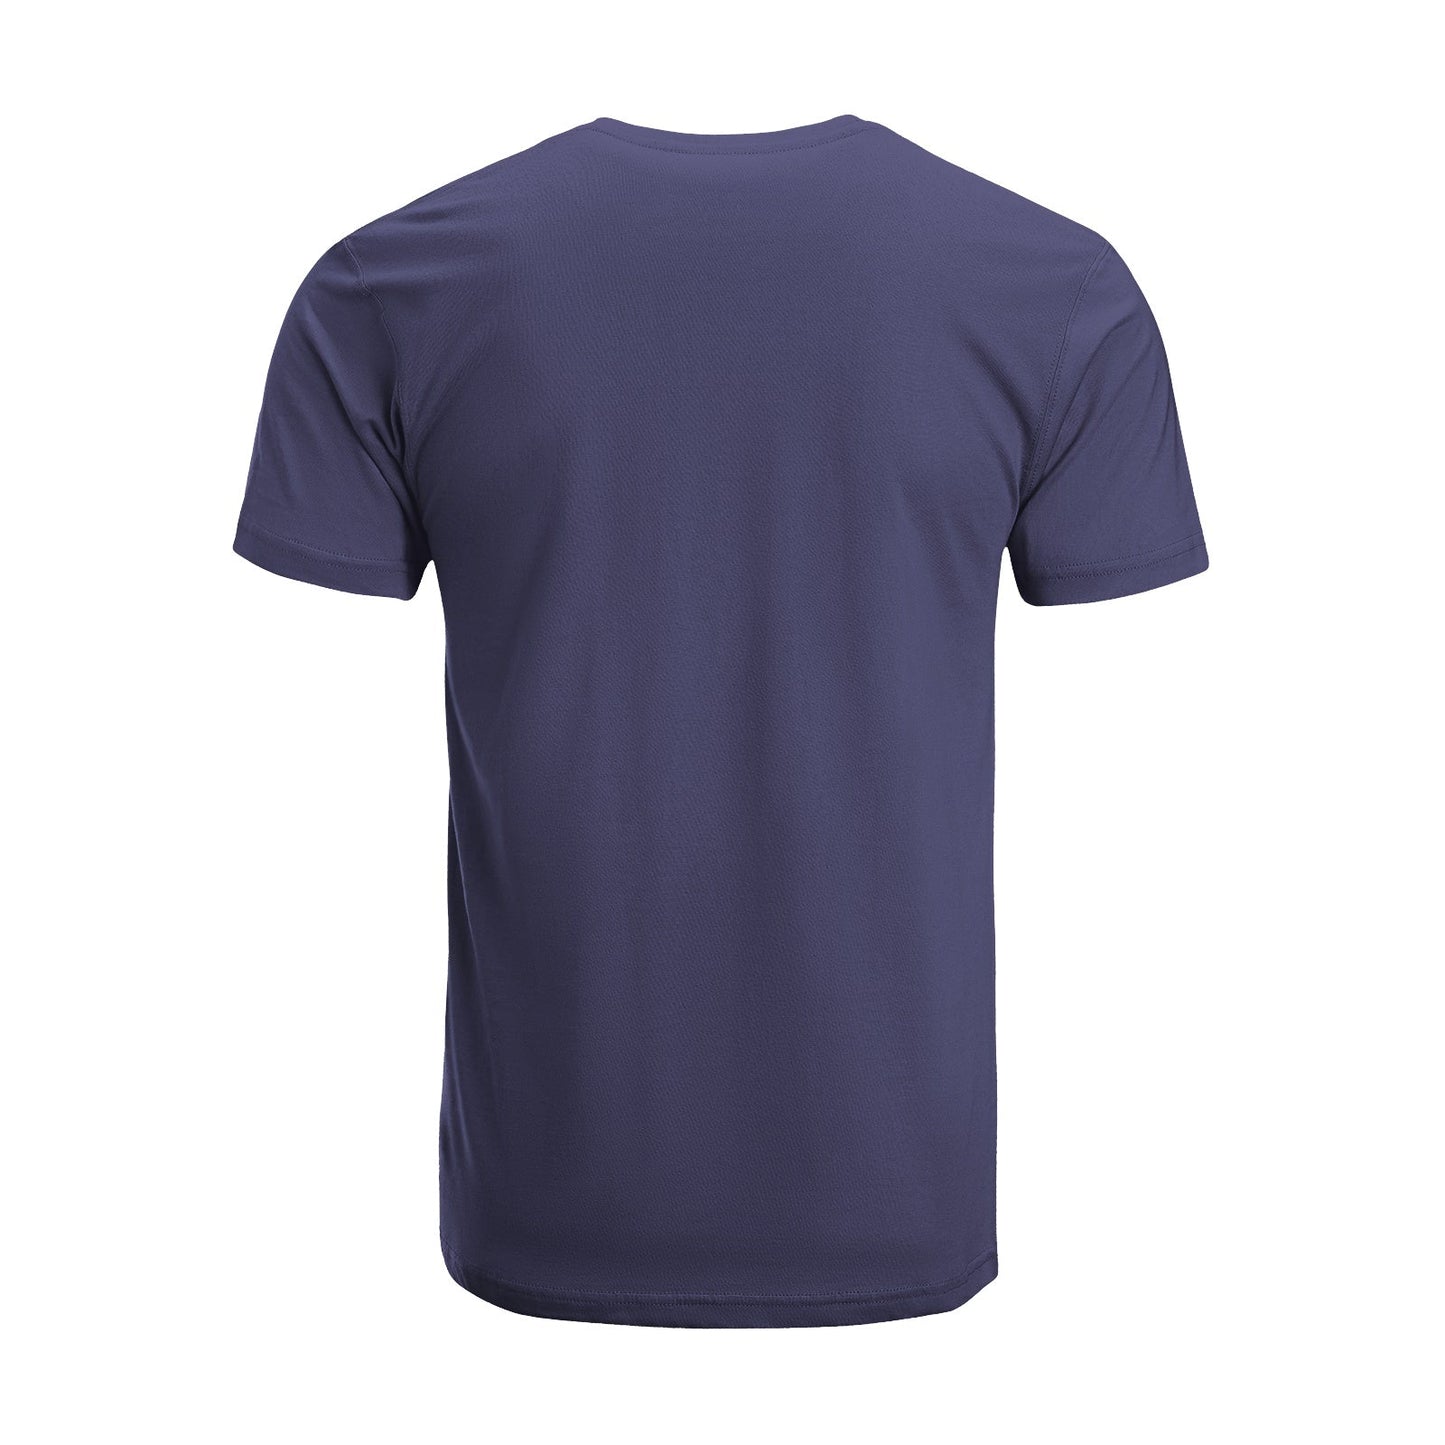 Unisex Short Sleeve Crew Neck Cotton Jersey T-Shirt CAT 42 - Tara-Outfits.com